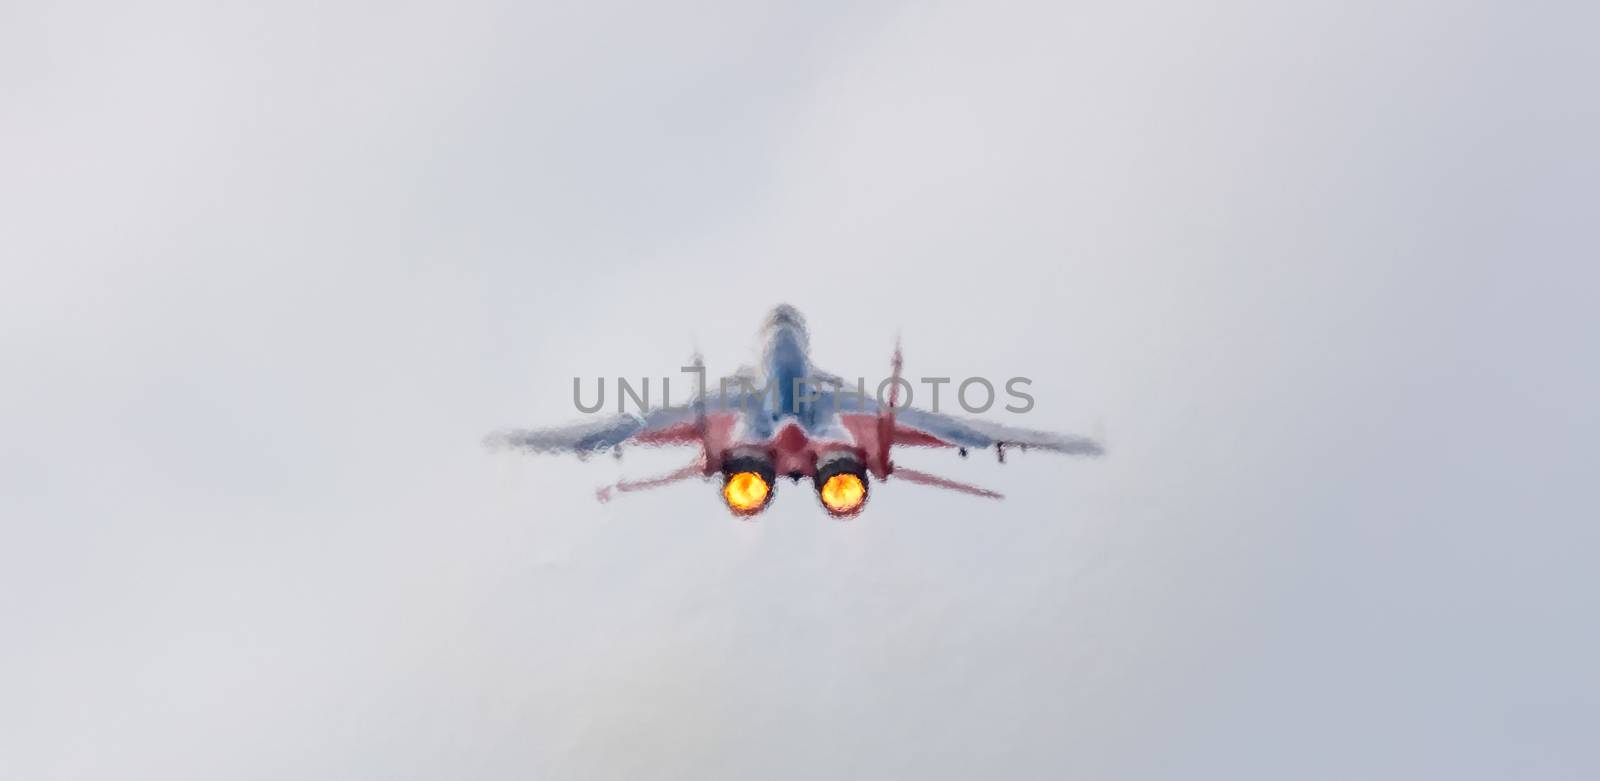 Strizhi MIG-29 fighter jet flying during aeroshow by DamantisZ